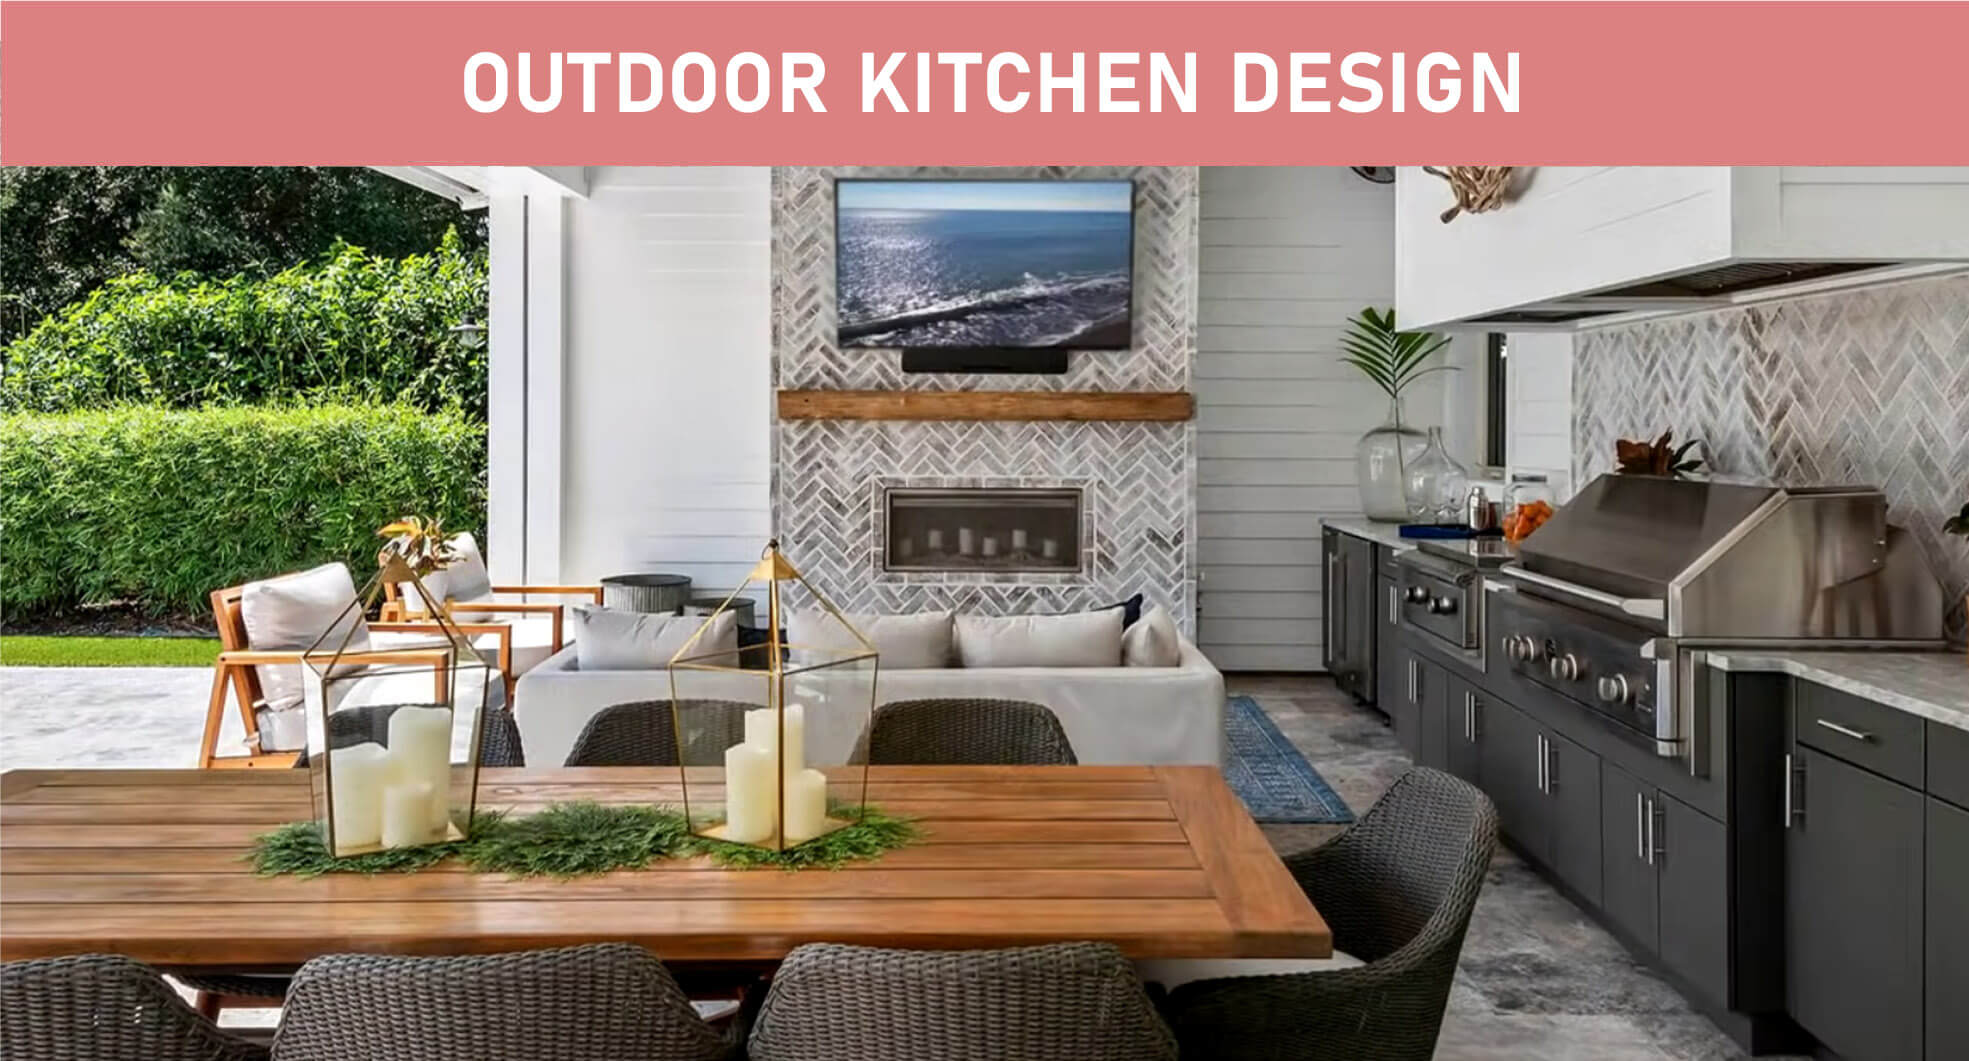 Kitchen design with hosting in mind